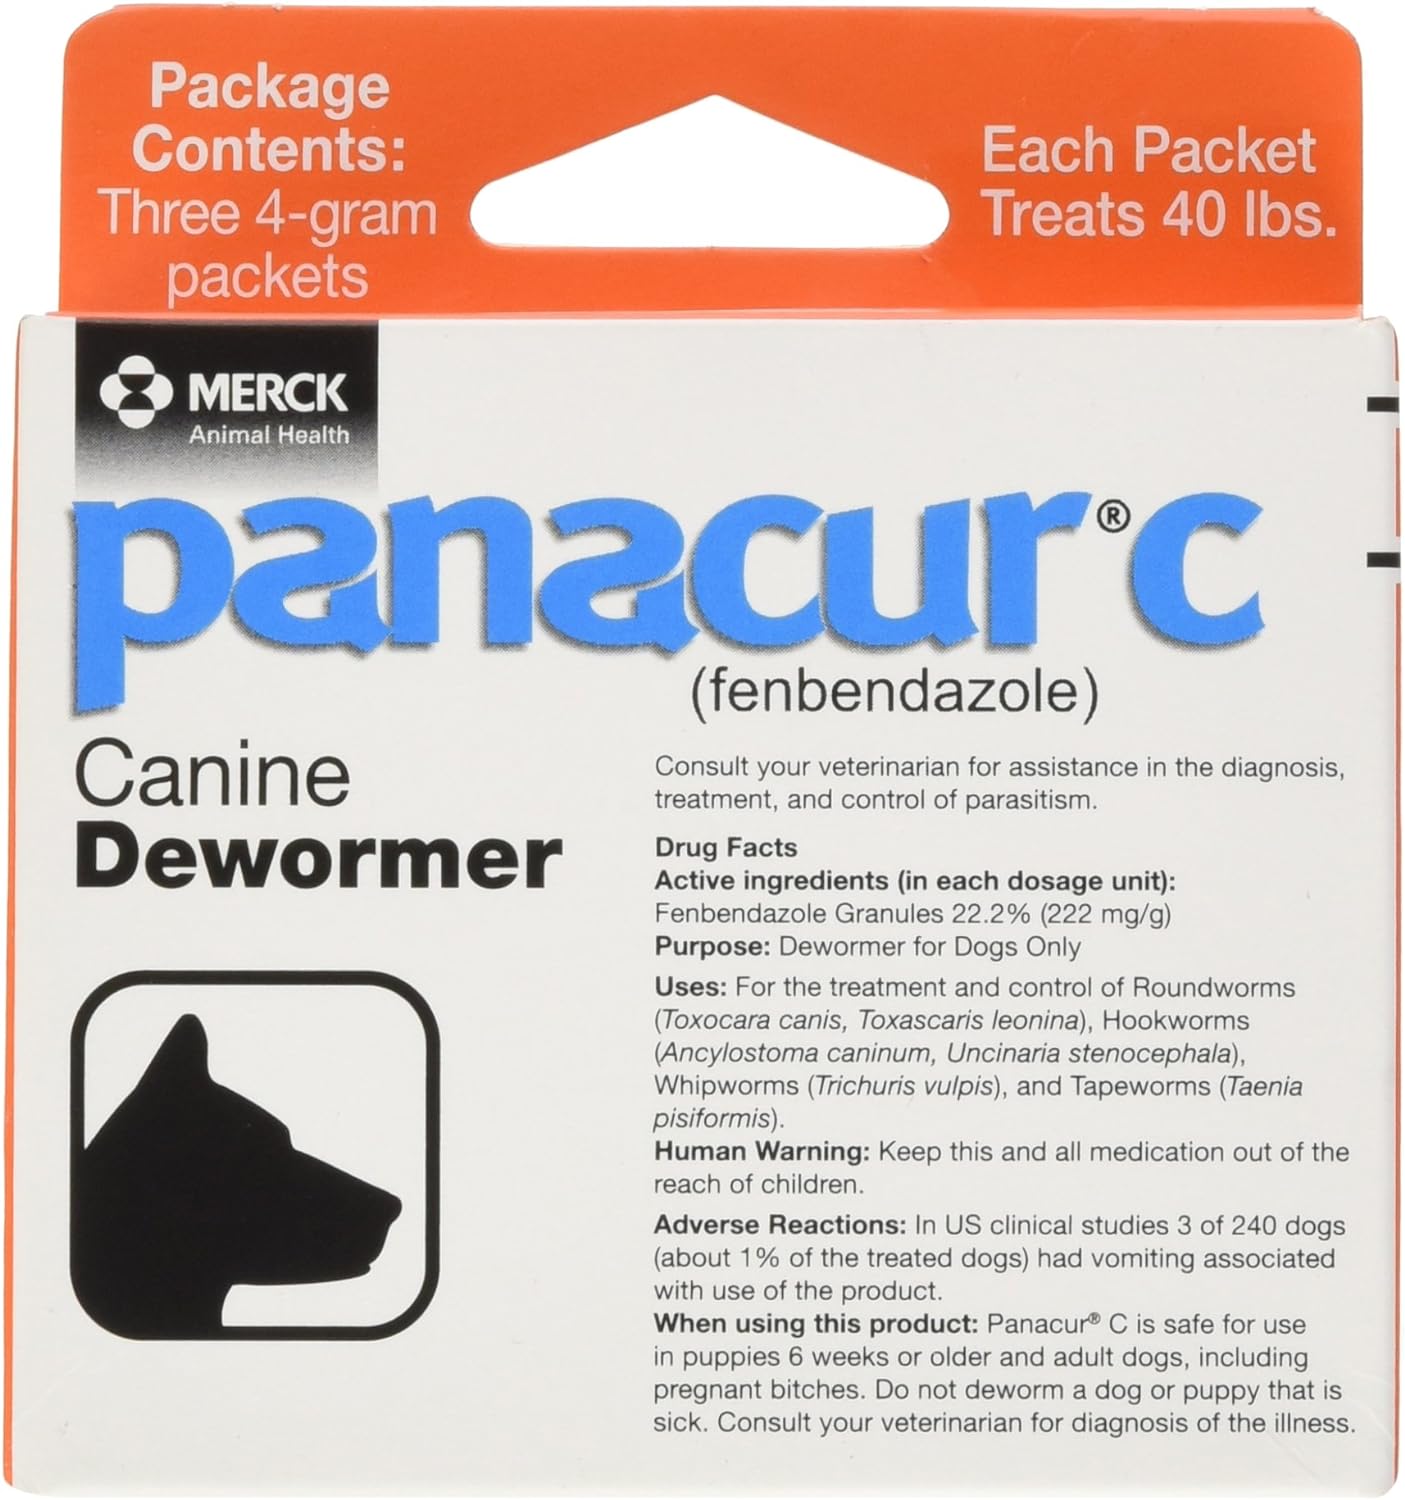 Panacur C Canine Dewormer (Fenbendazole)